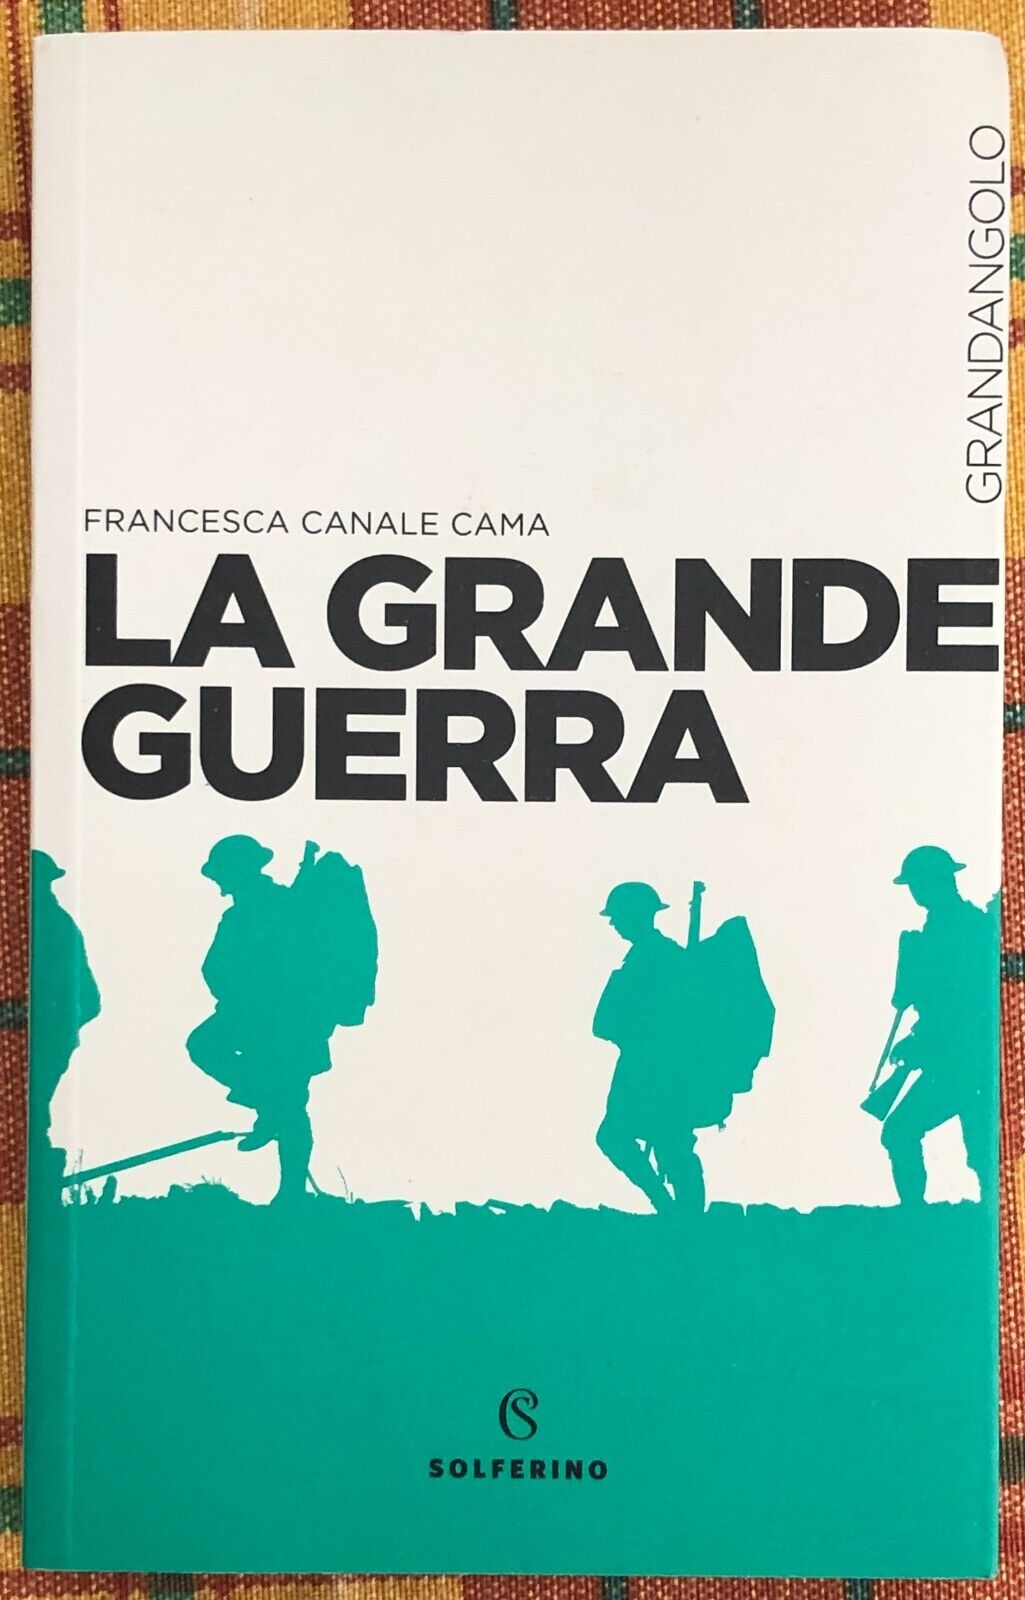 La Grande guerra di Francesca Canale Cama, 2019, Solferino libro usato